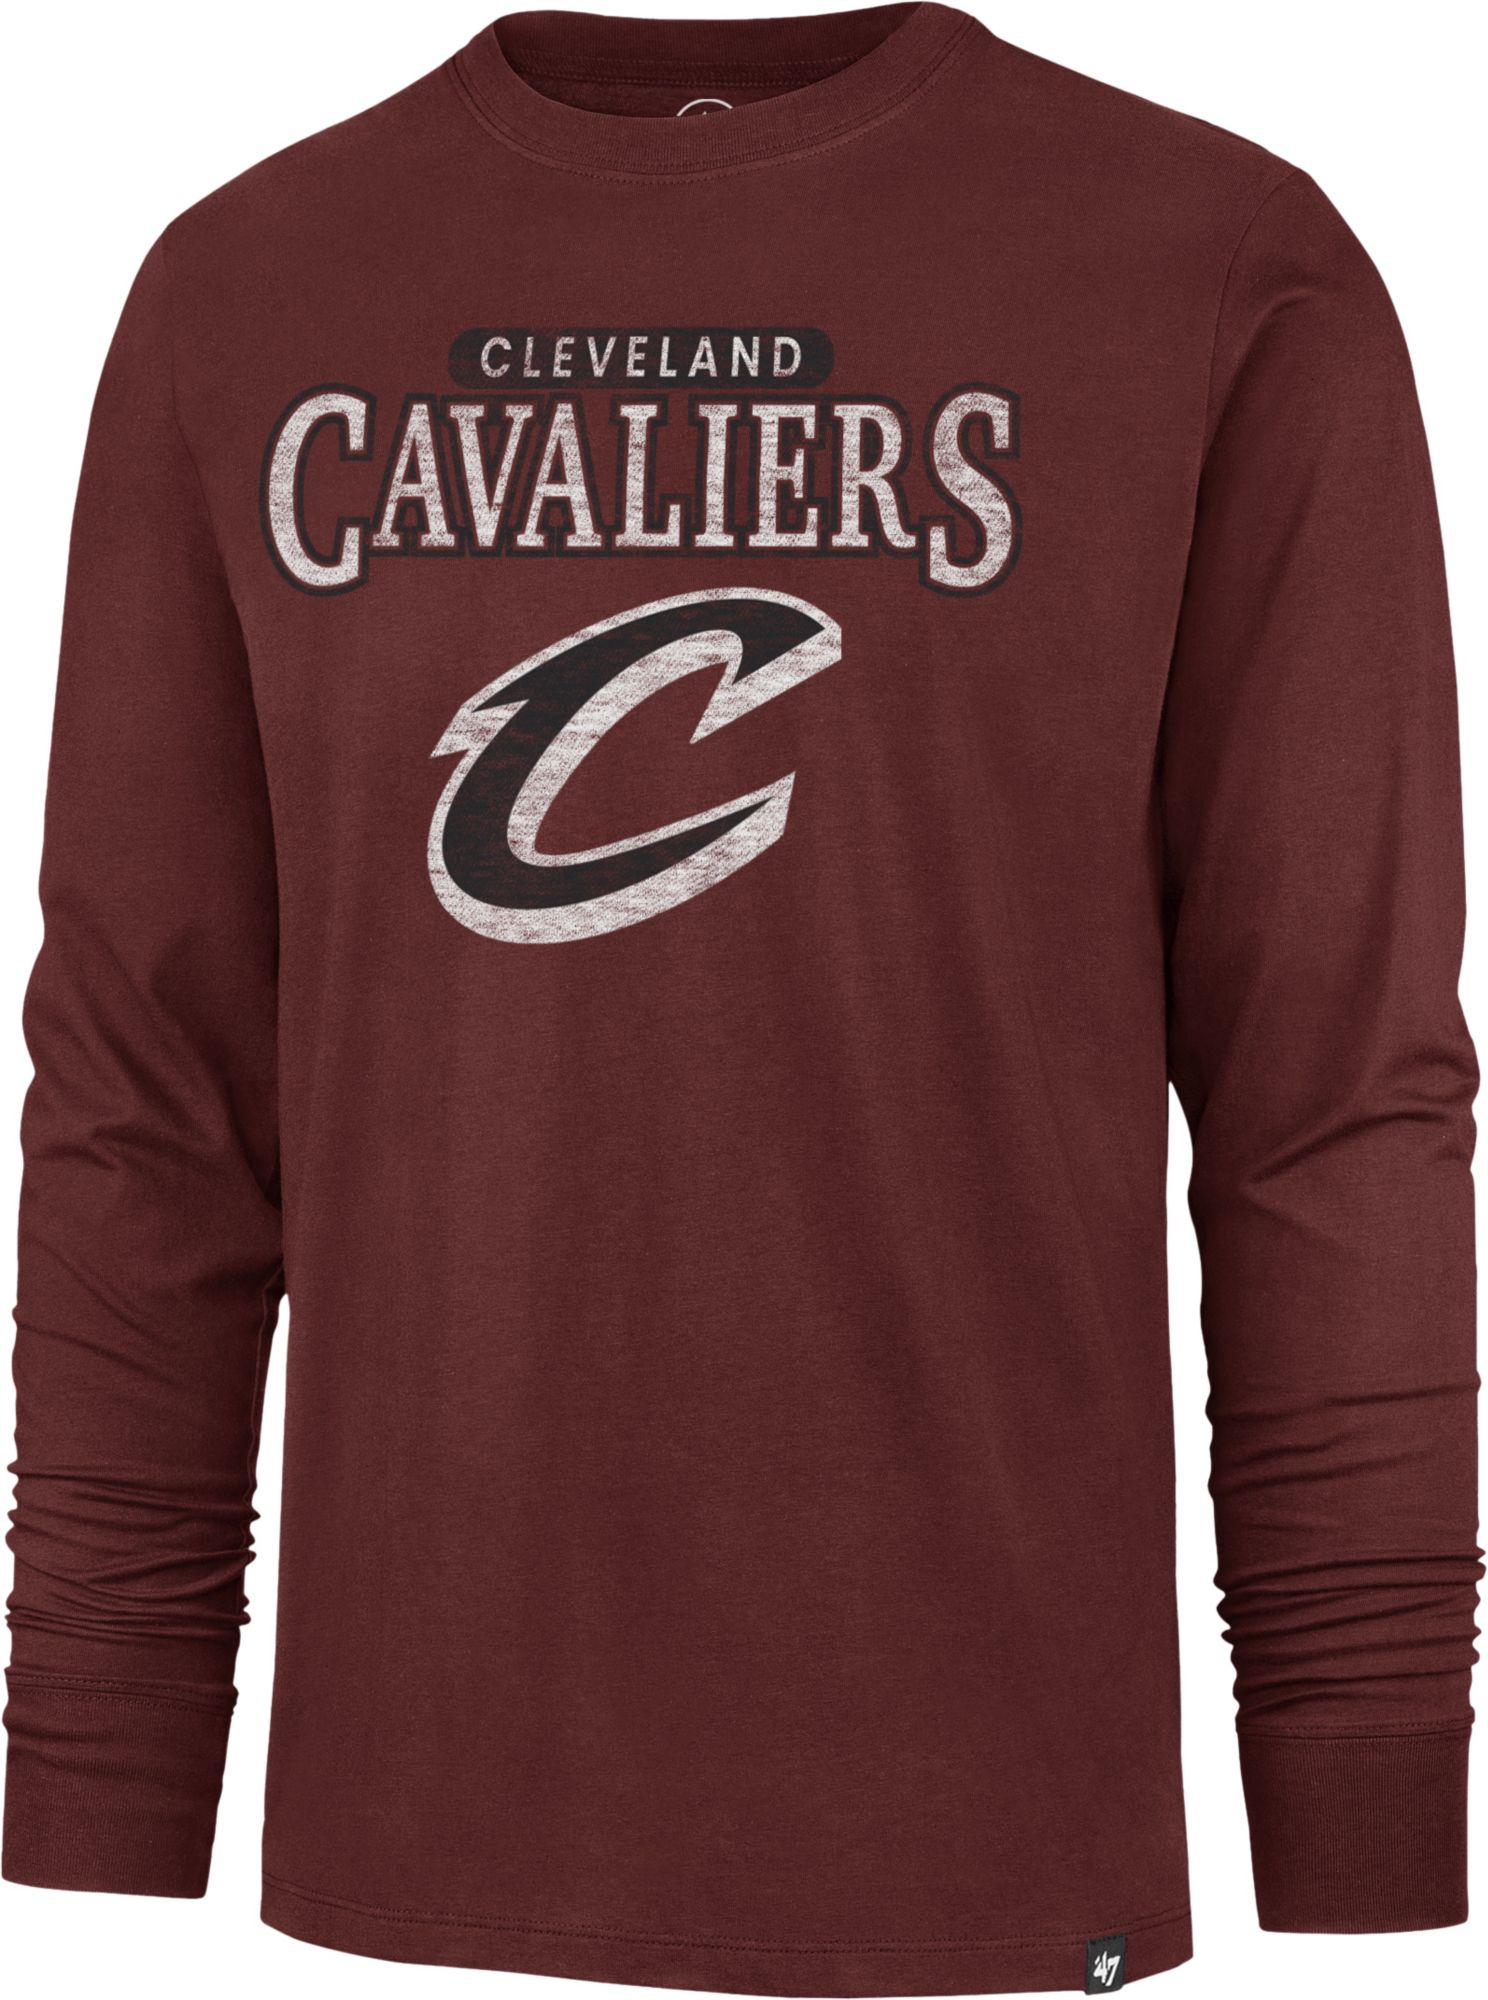 cleveland cavaliers t shirt design